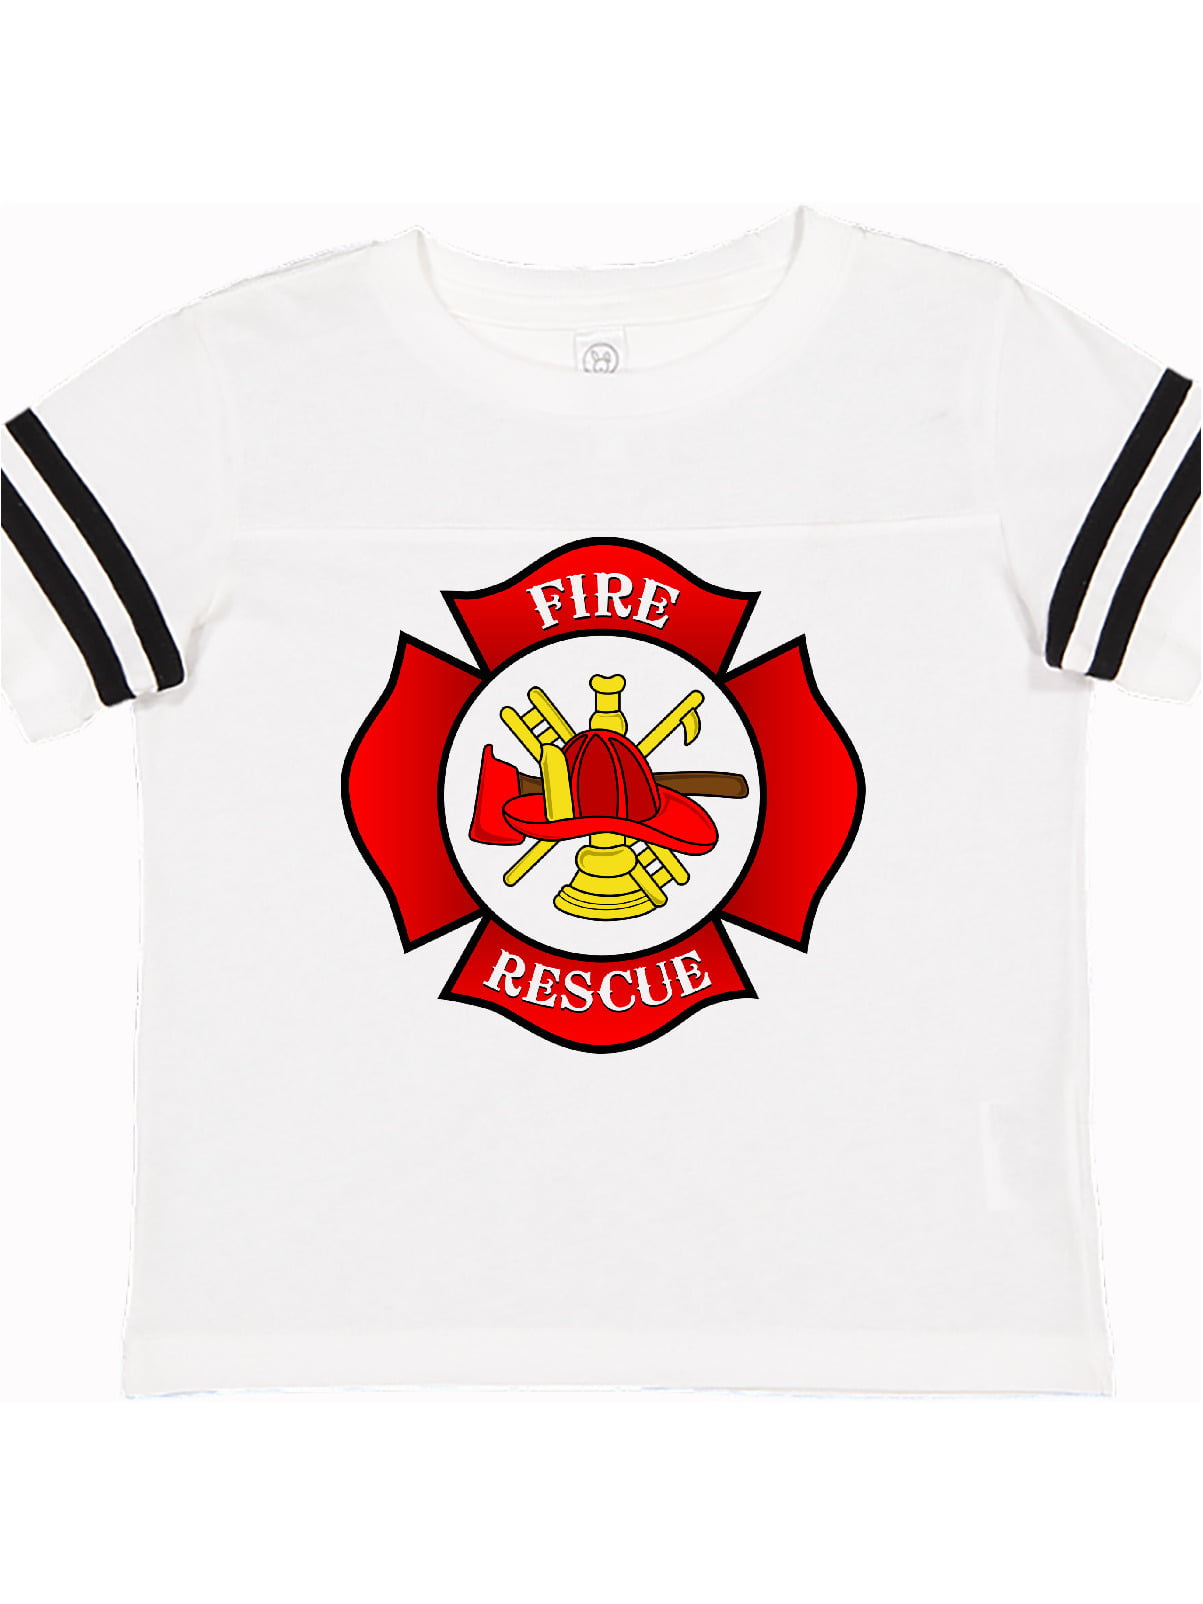 Personalized Maltese Cross Fire Fighter Fire Department T-shirt Custom tee shirt